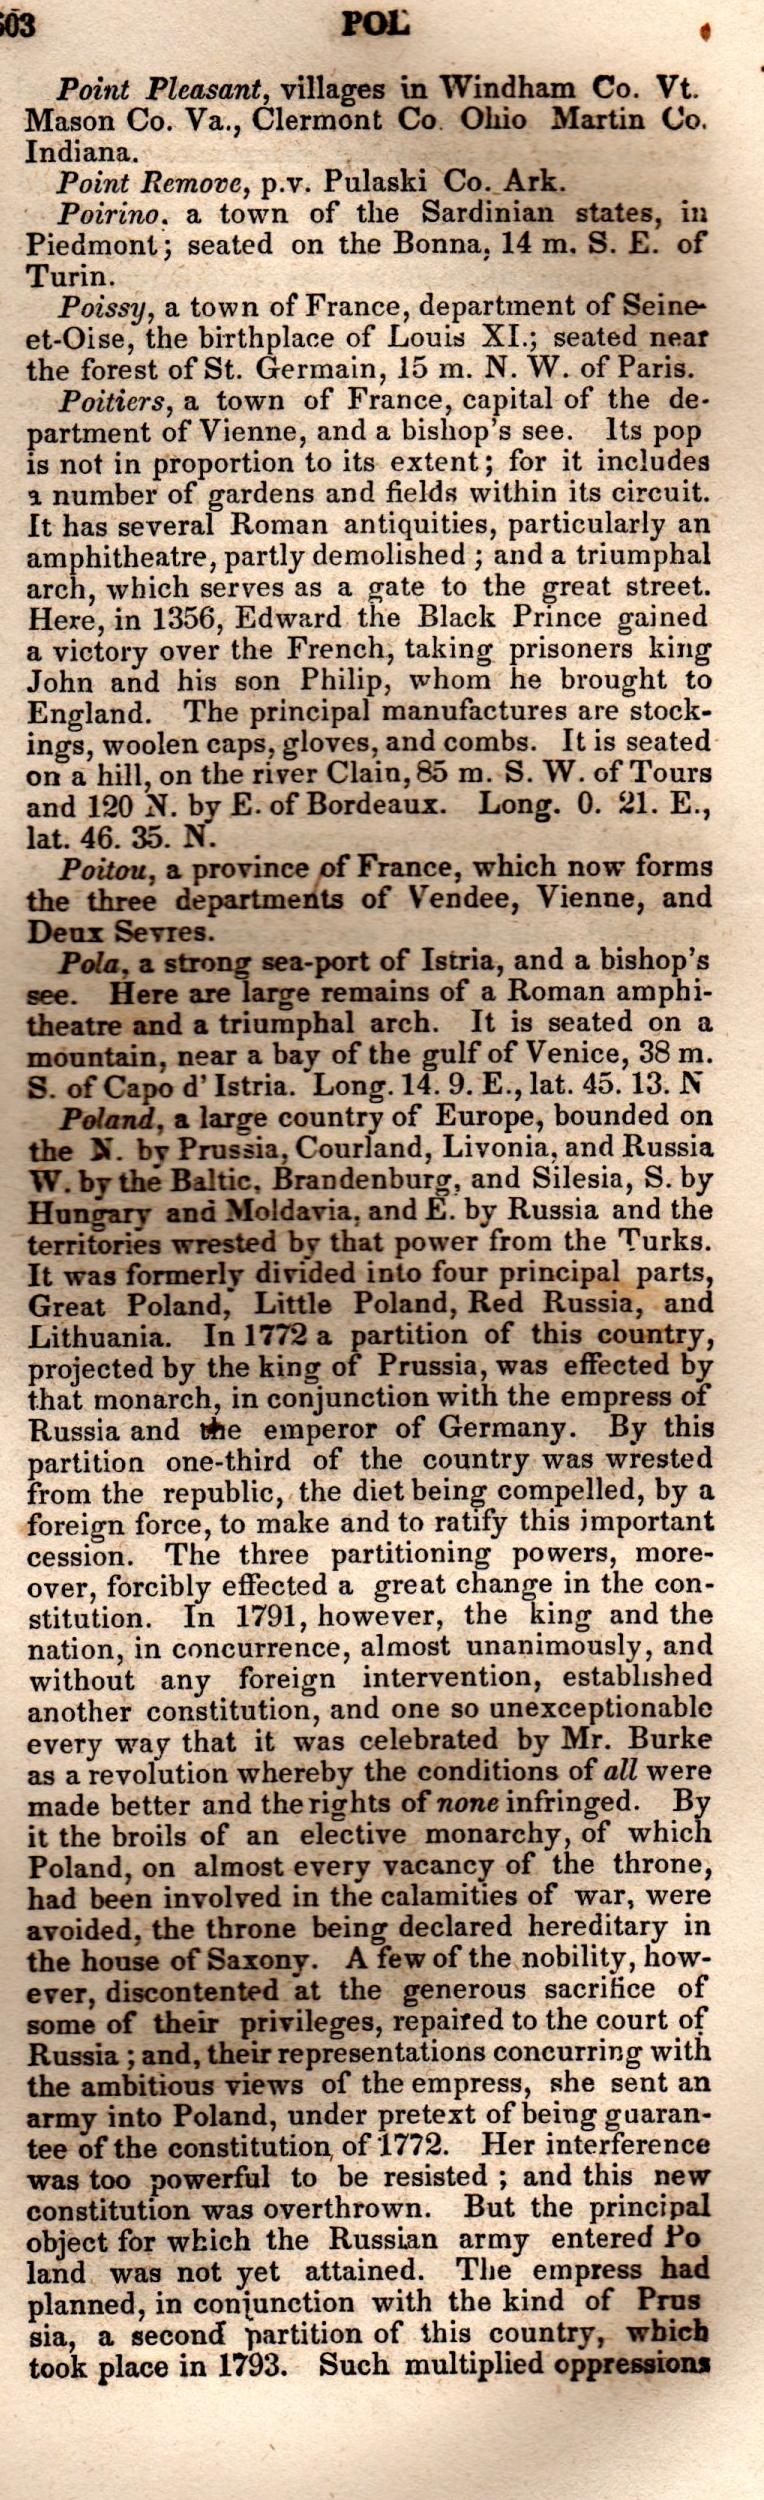 Brookes’ Universal Gazetteer (1850), Page 603 Right Column